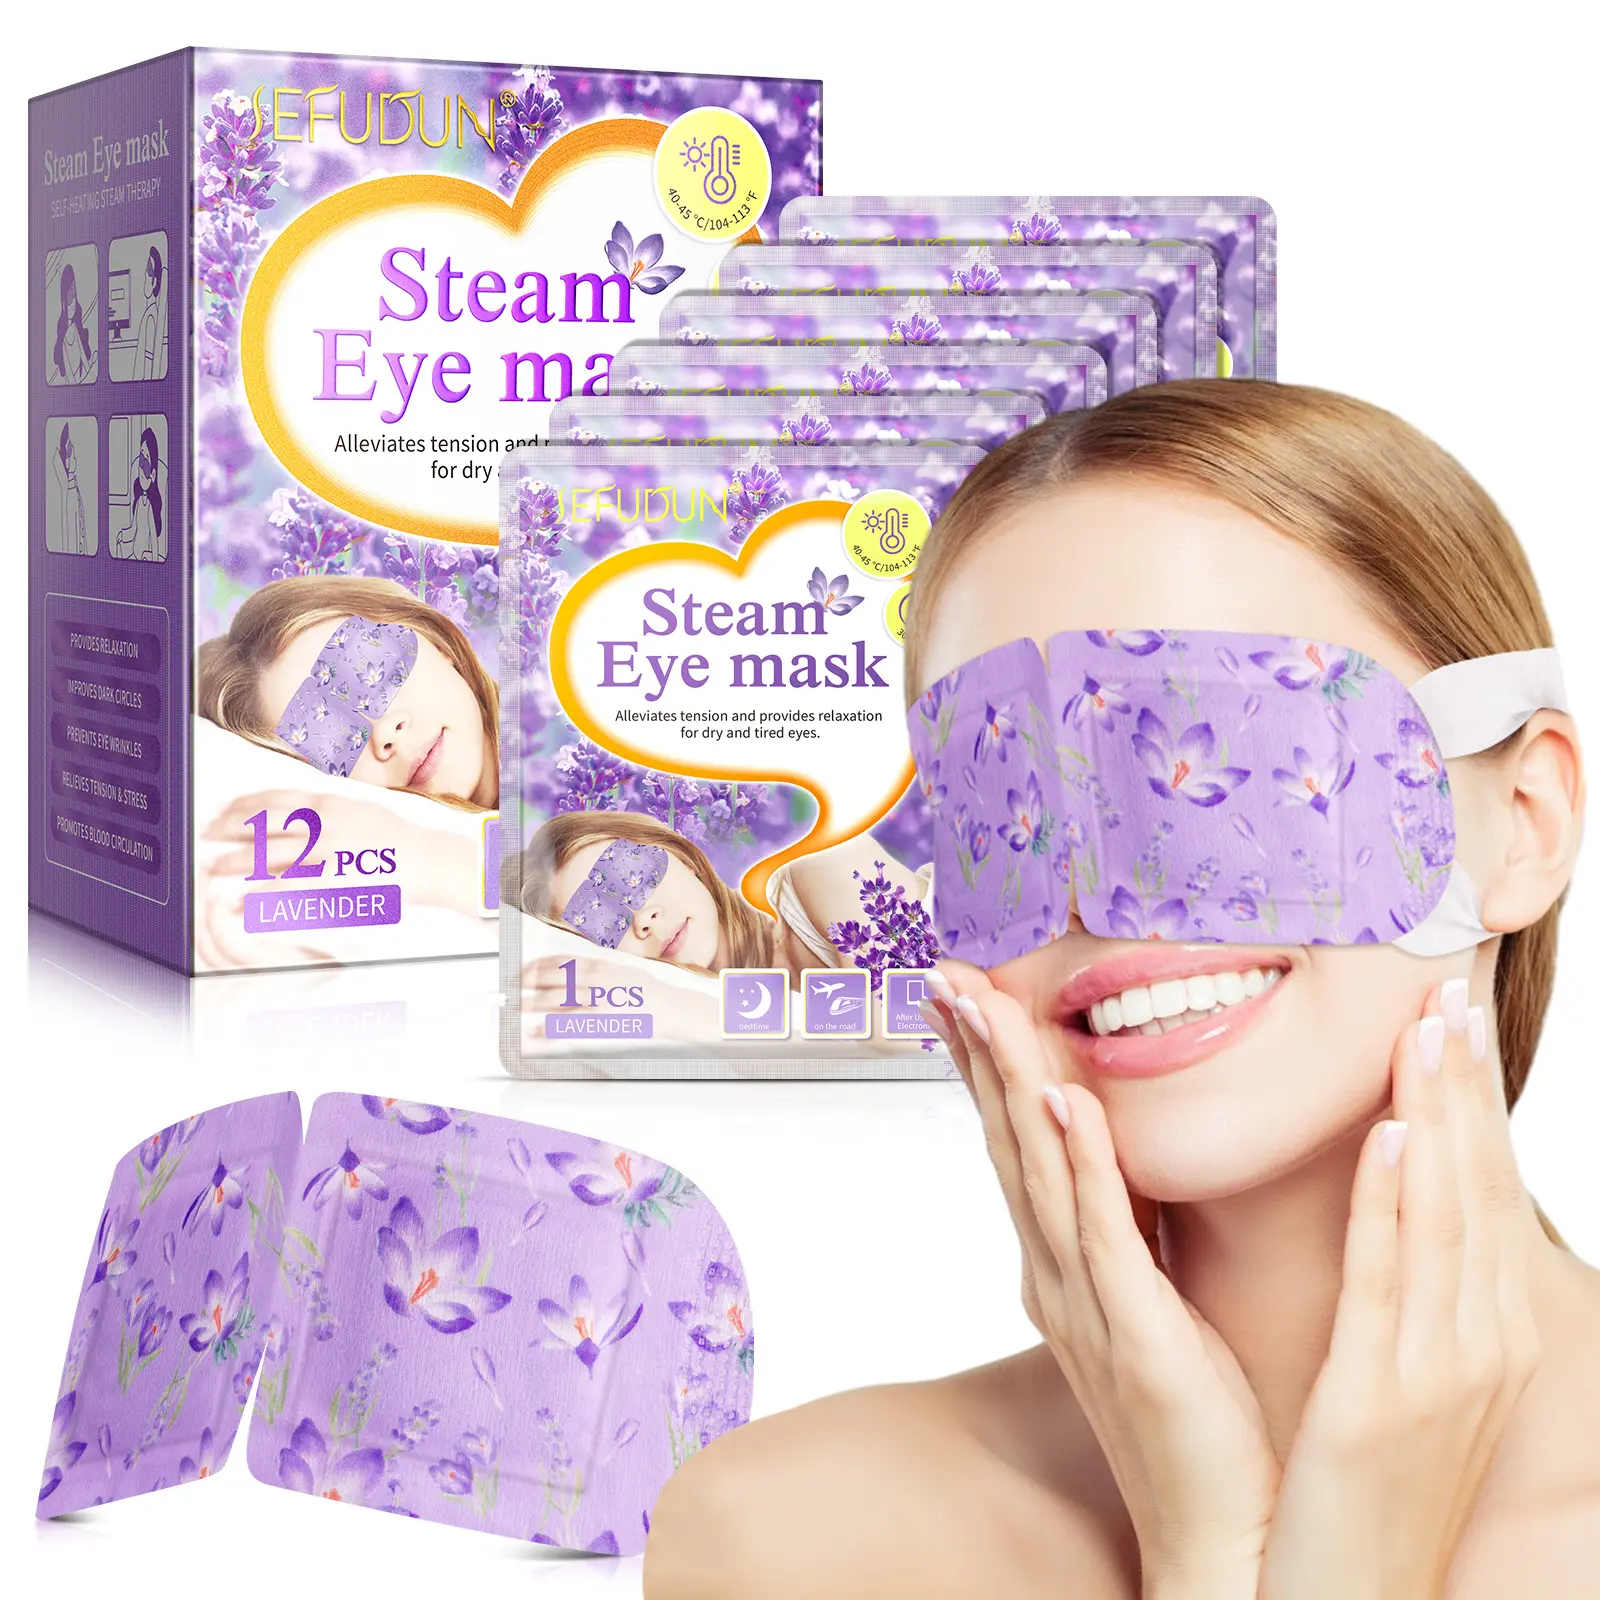 SEFUDUN disposable heated lavender eyemask self heating warm sleep instant relieve eye fatigue steam eye mask for dry eye